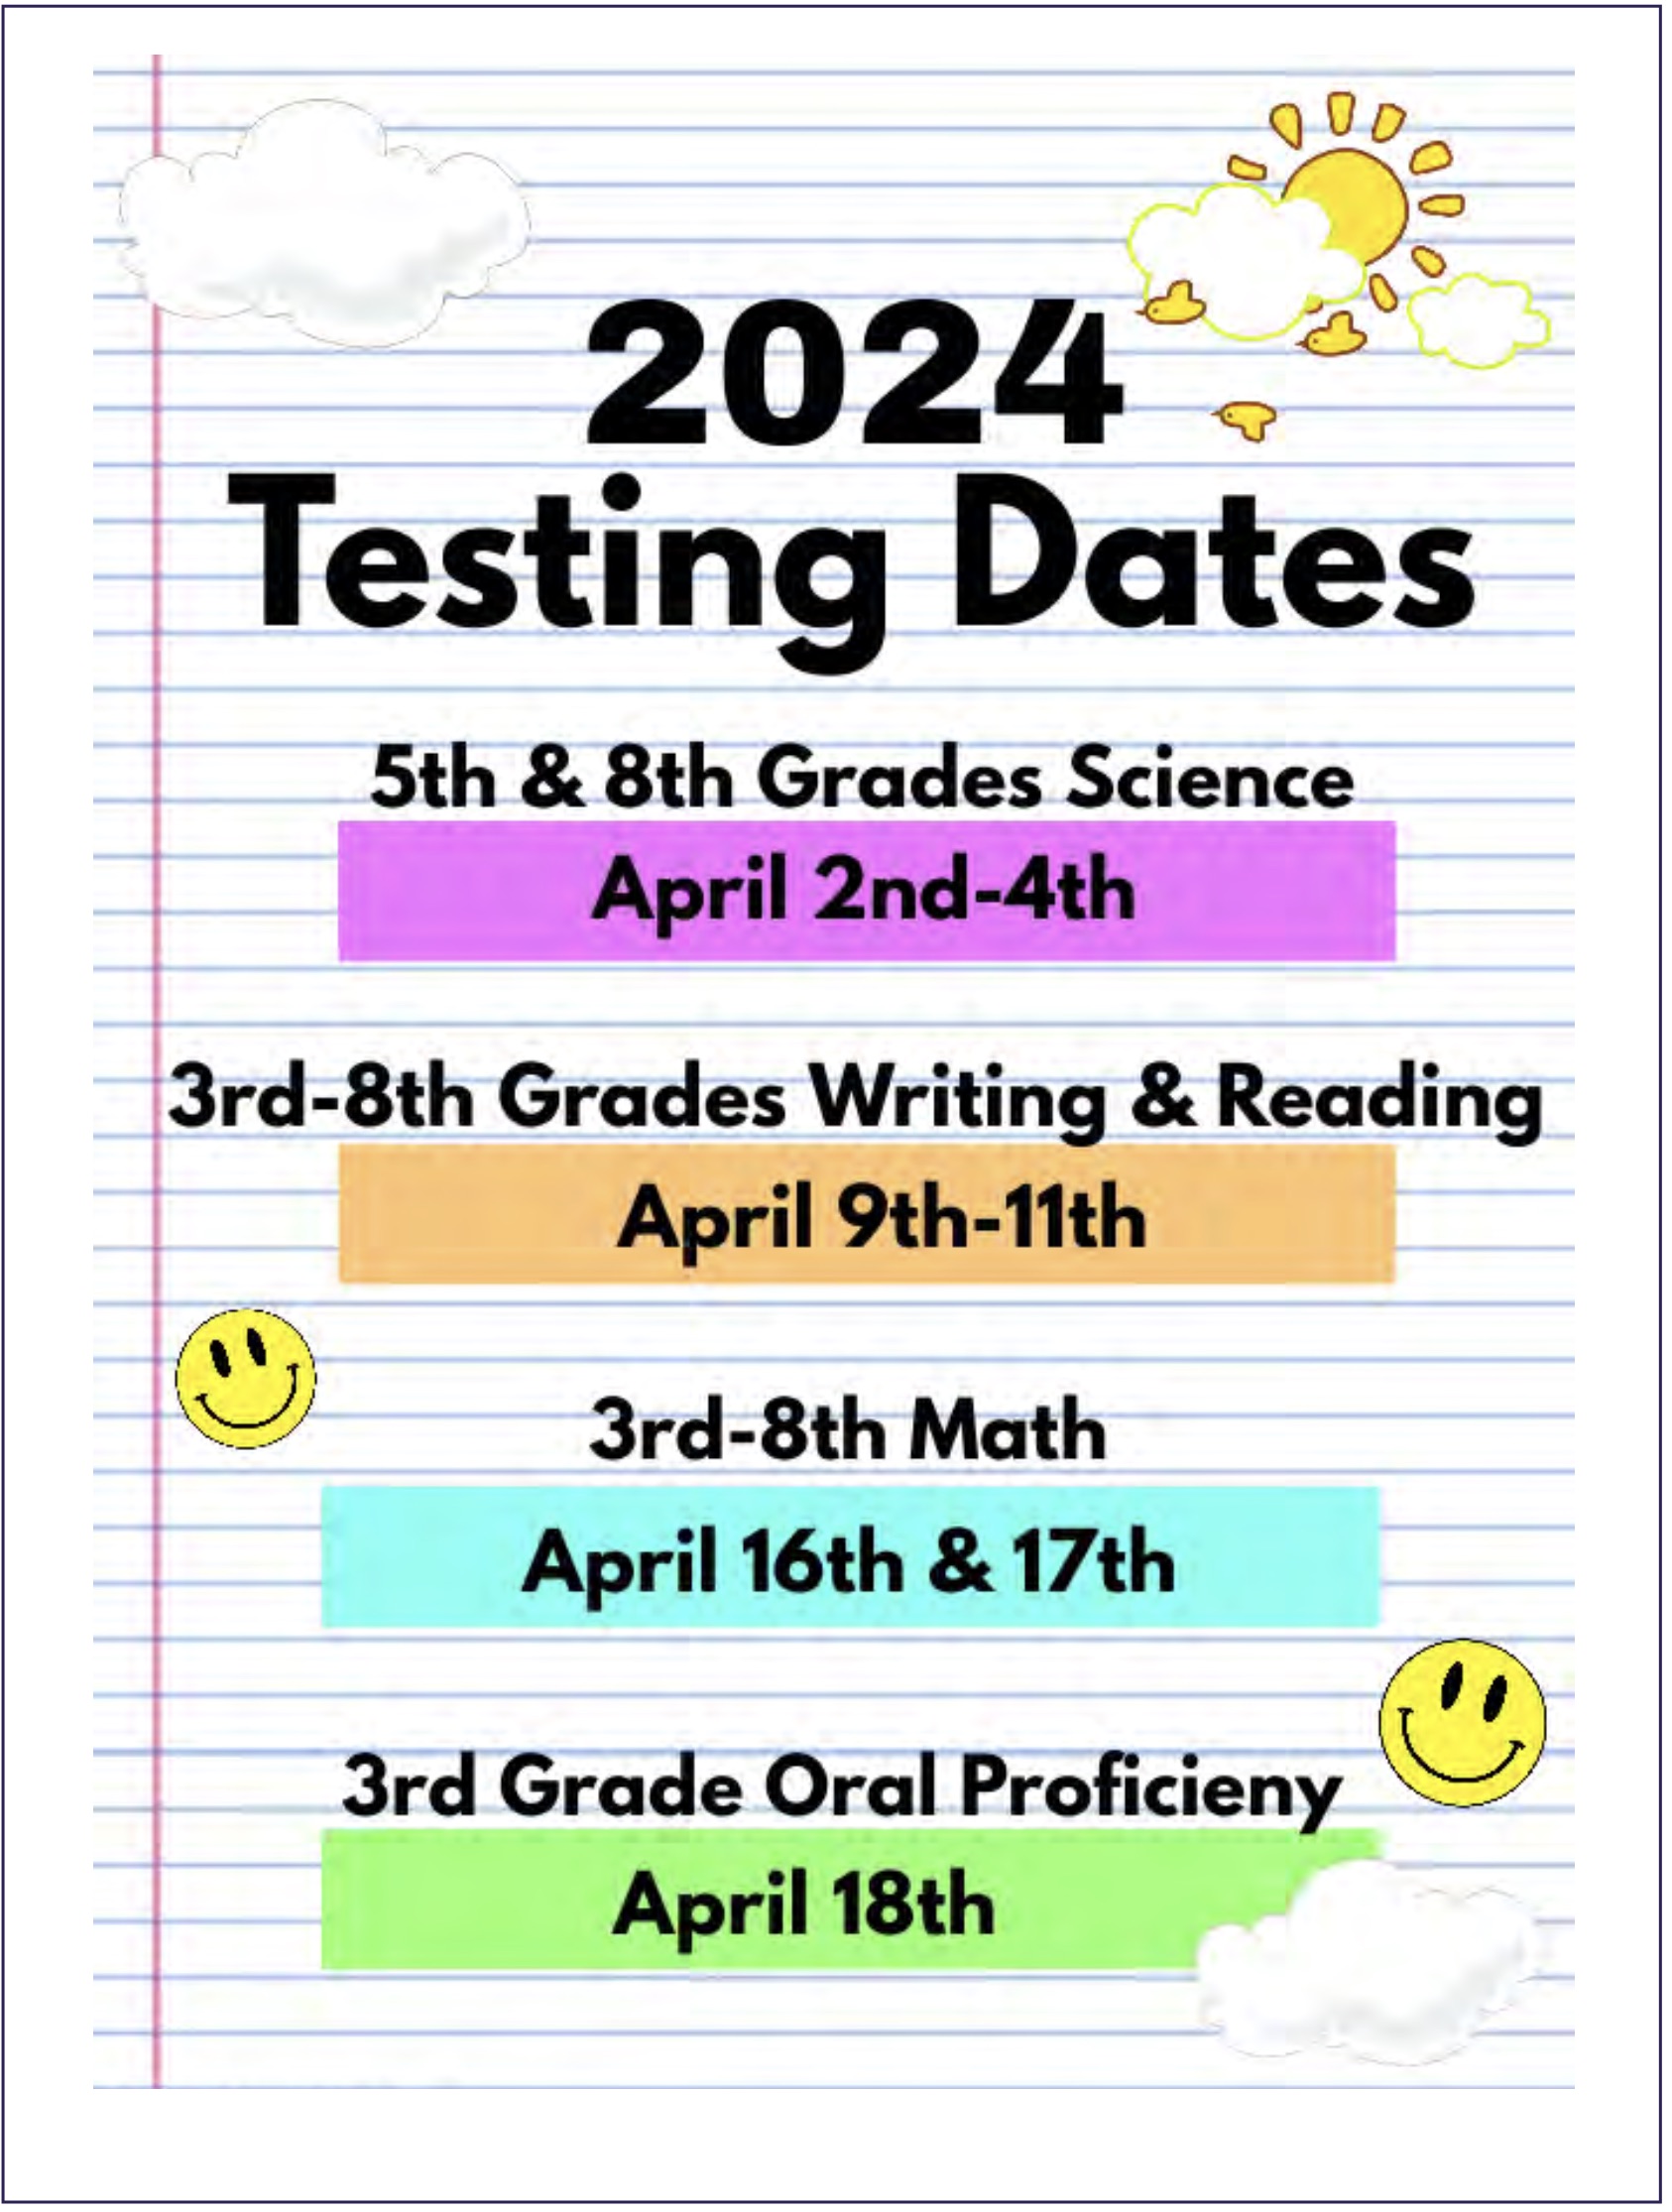 2024 Testing Dates flyer